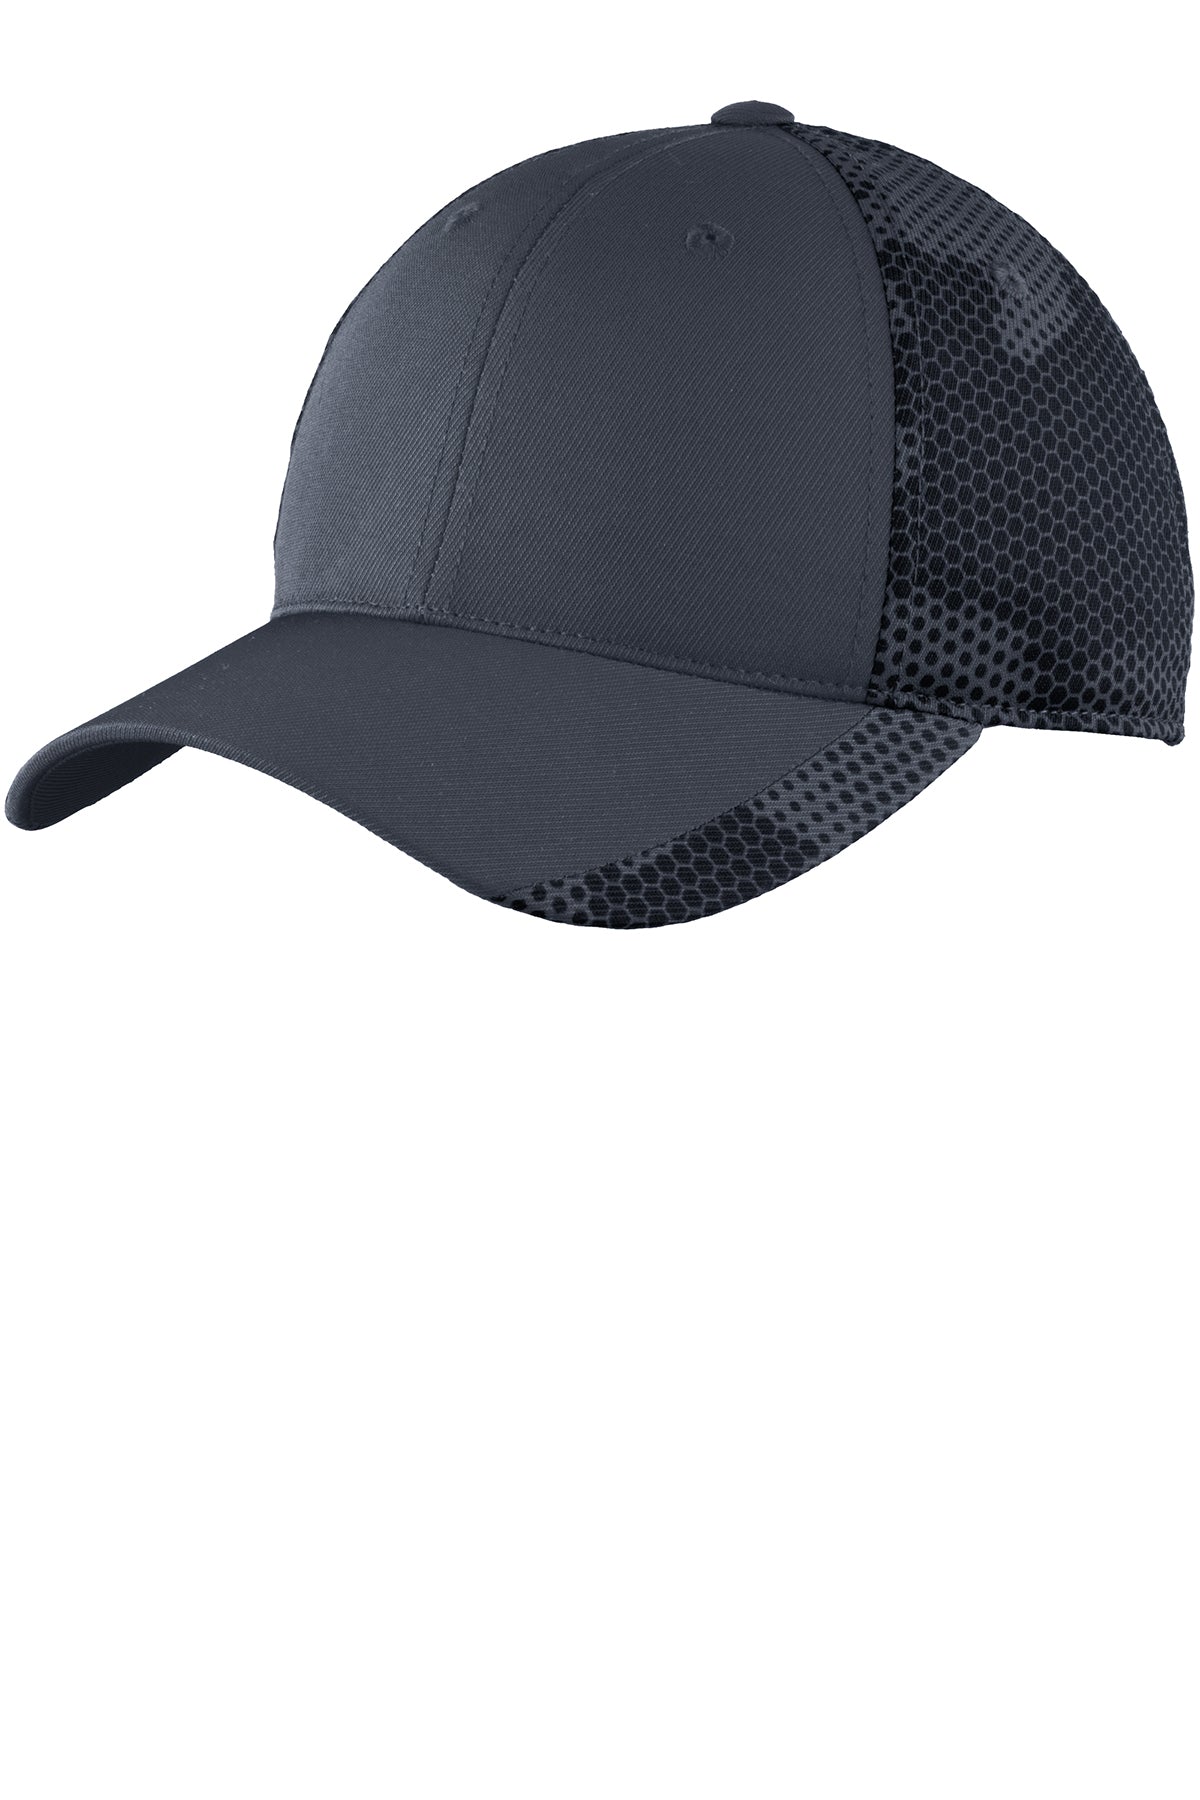 Sport-Tek Branded CamoHex Caps, Iron Grey